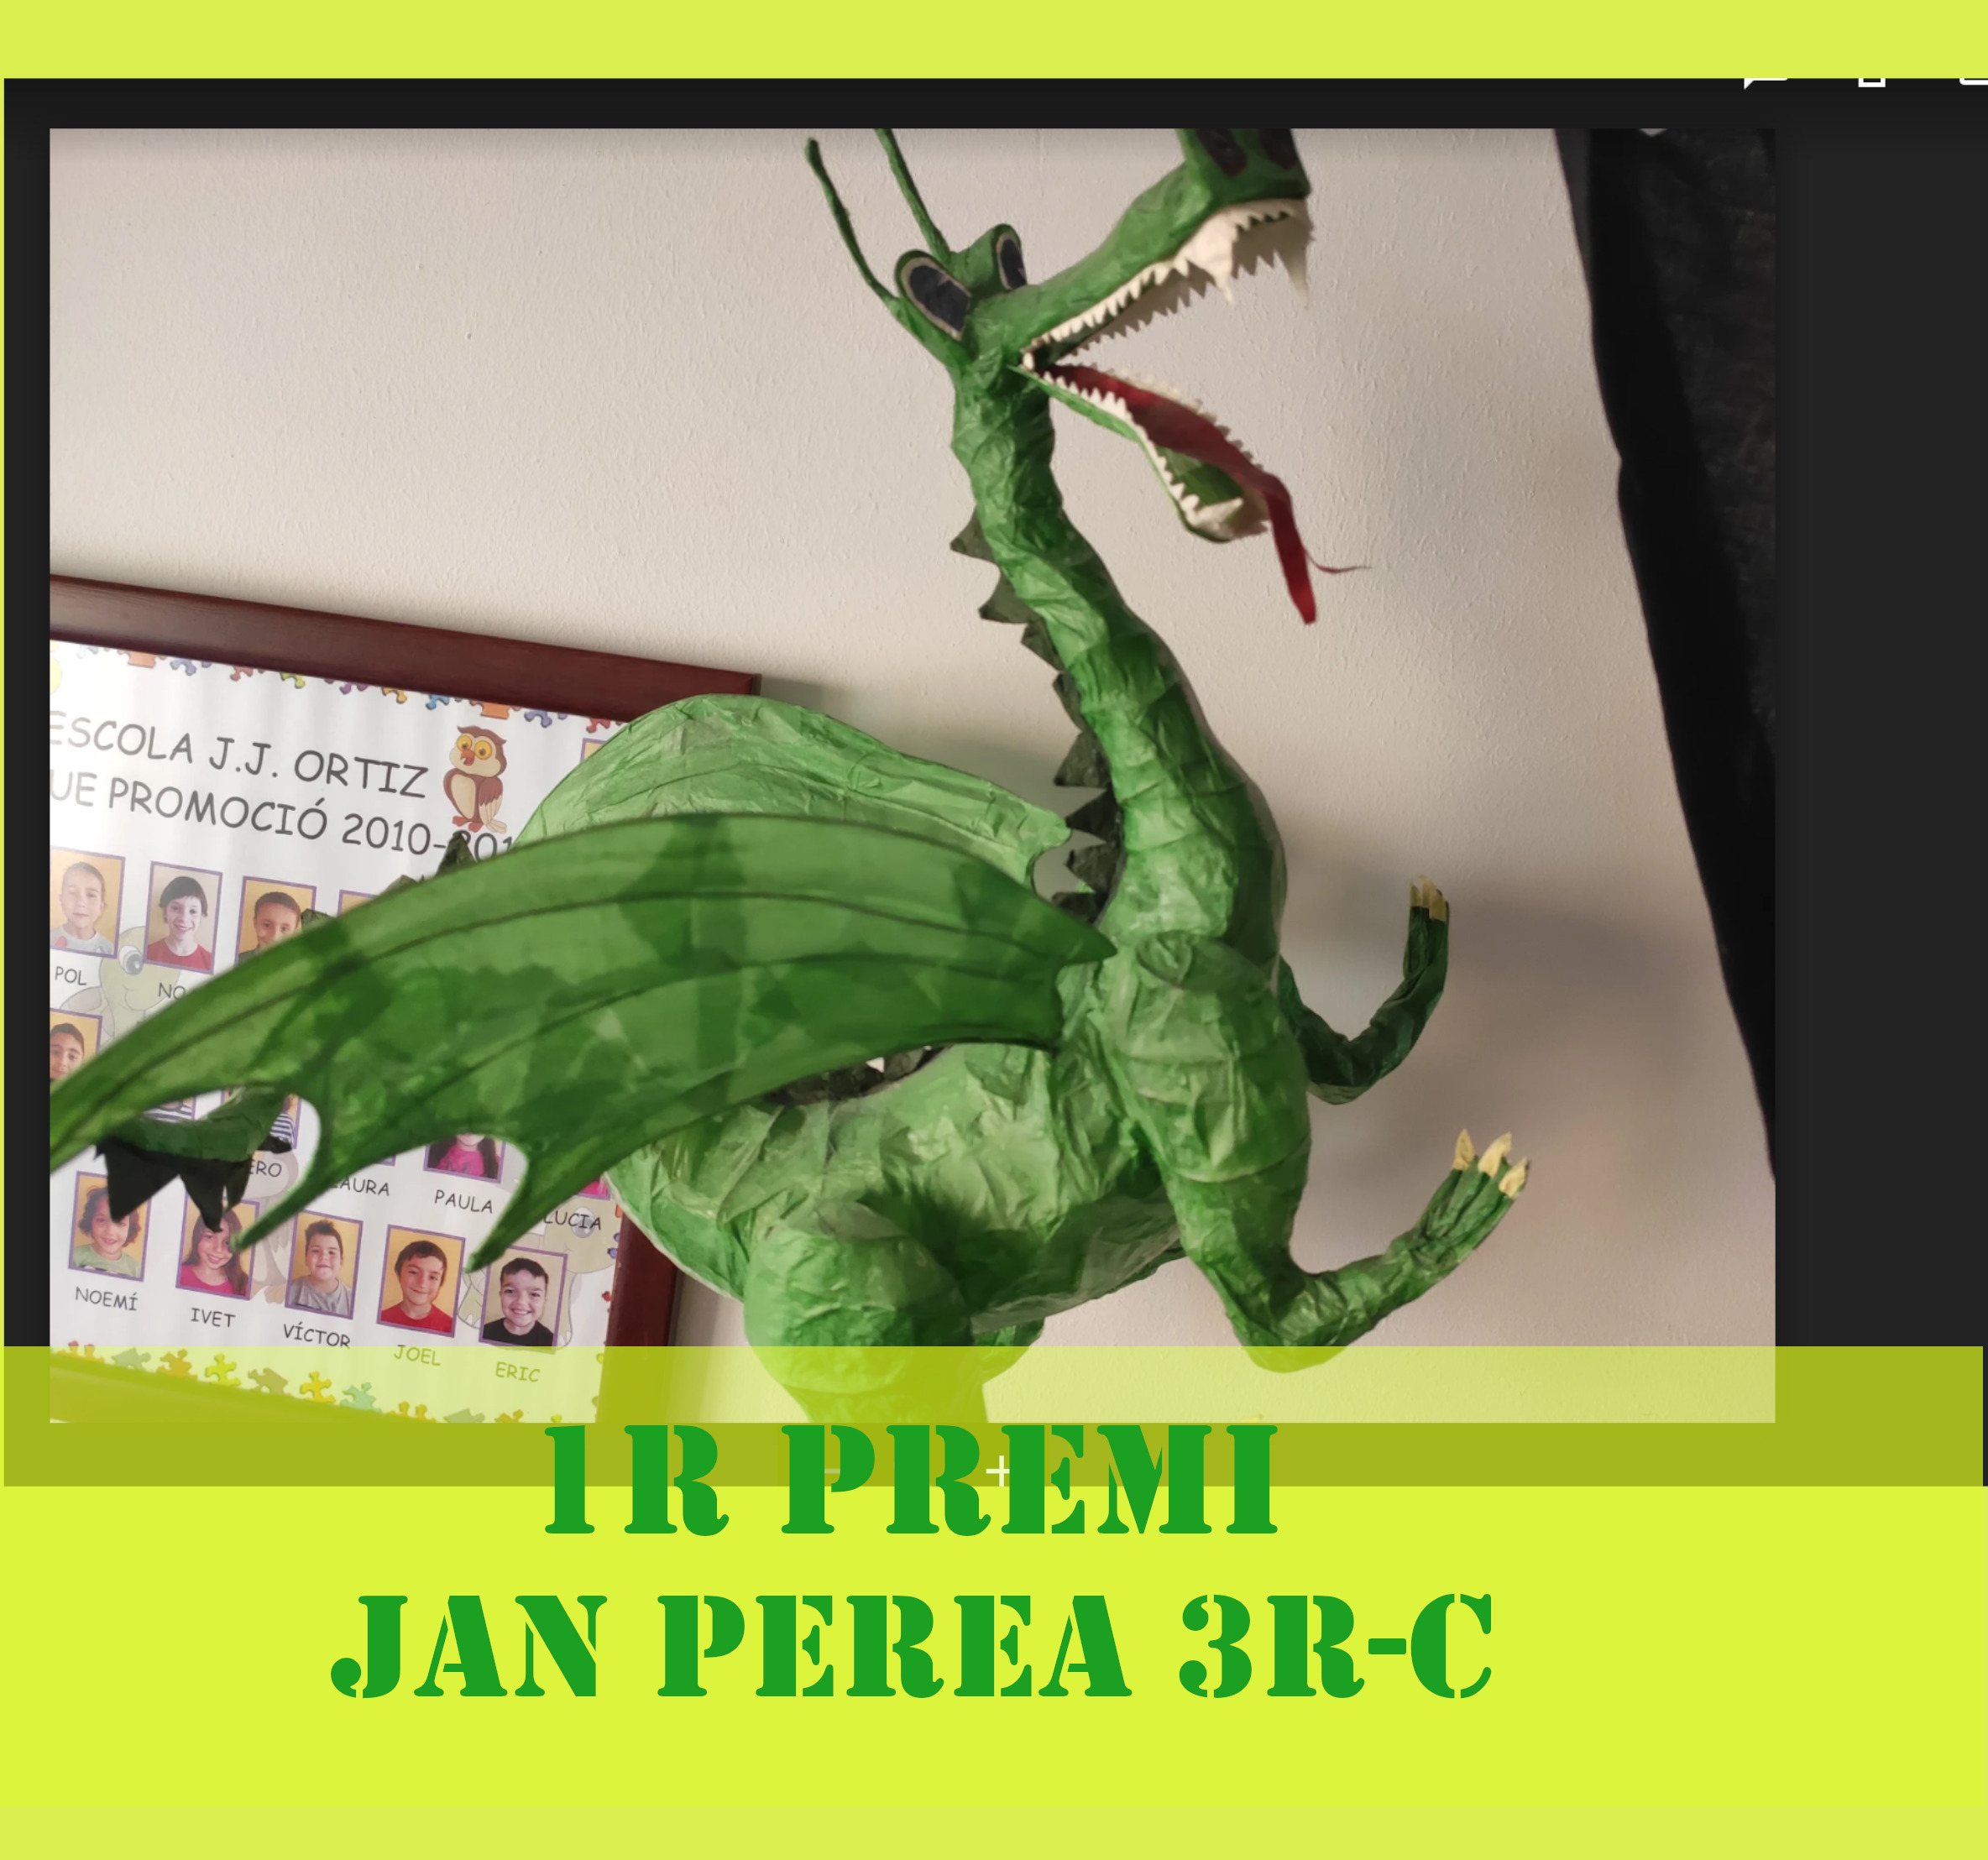 1r Premi Jan Perea 3rC